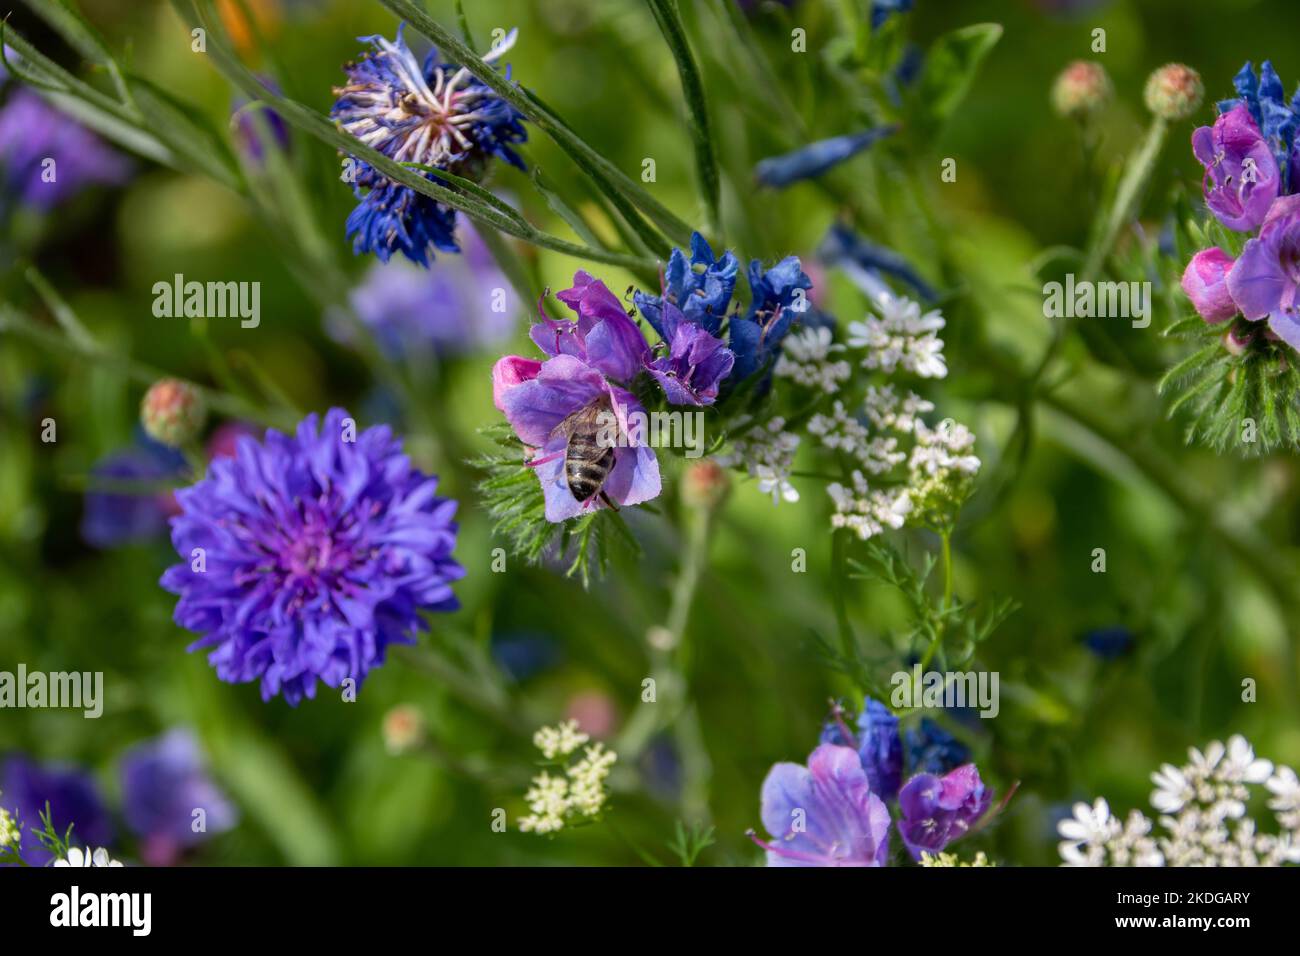 Bumblebee collectant le nectar de jolies fleurs bleues et roses de Bugloss Echium vulgare de Viper Banque D'Images